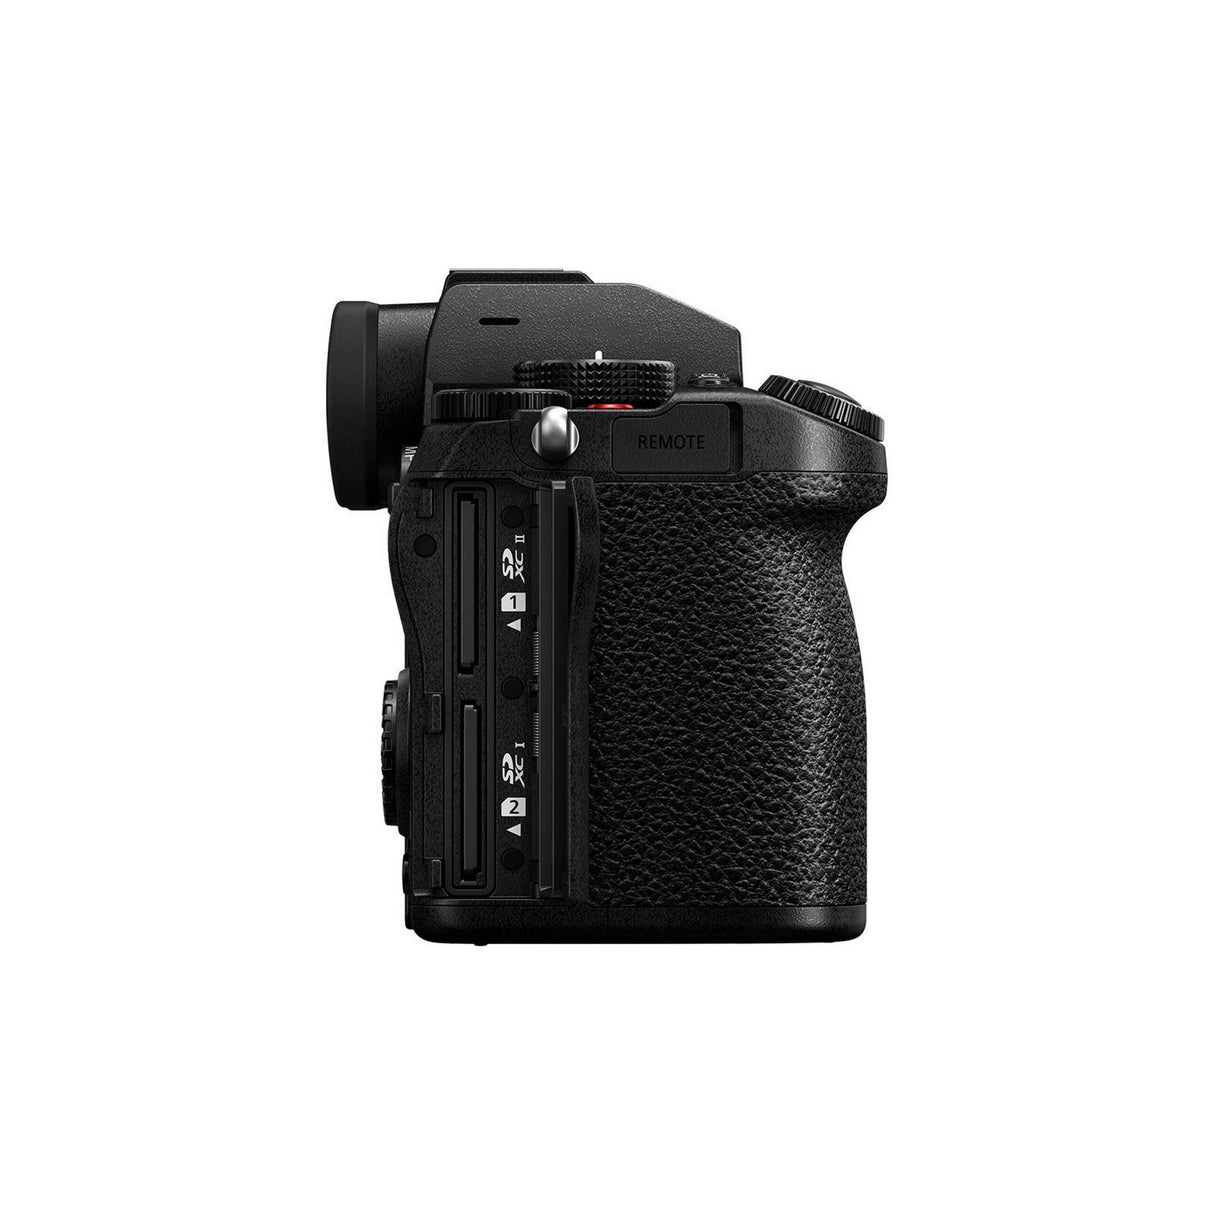 Panasonic LUMIX S5 4K Mirrorless Full Frame L-Mount Camera